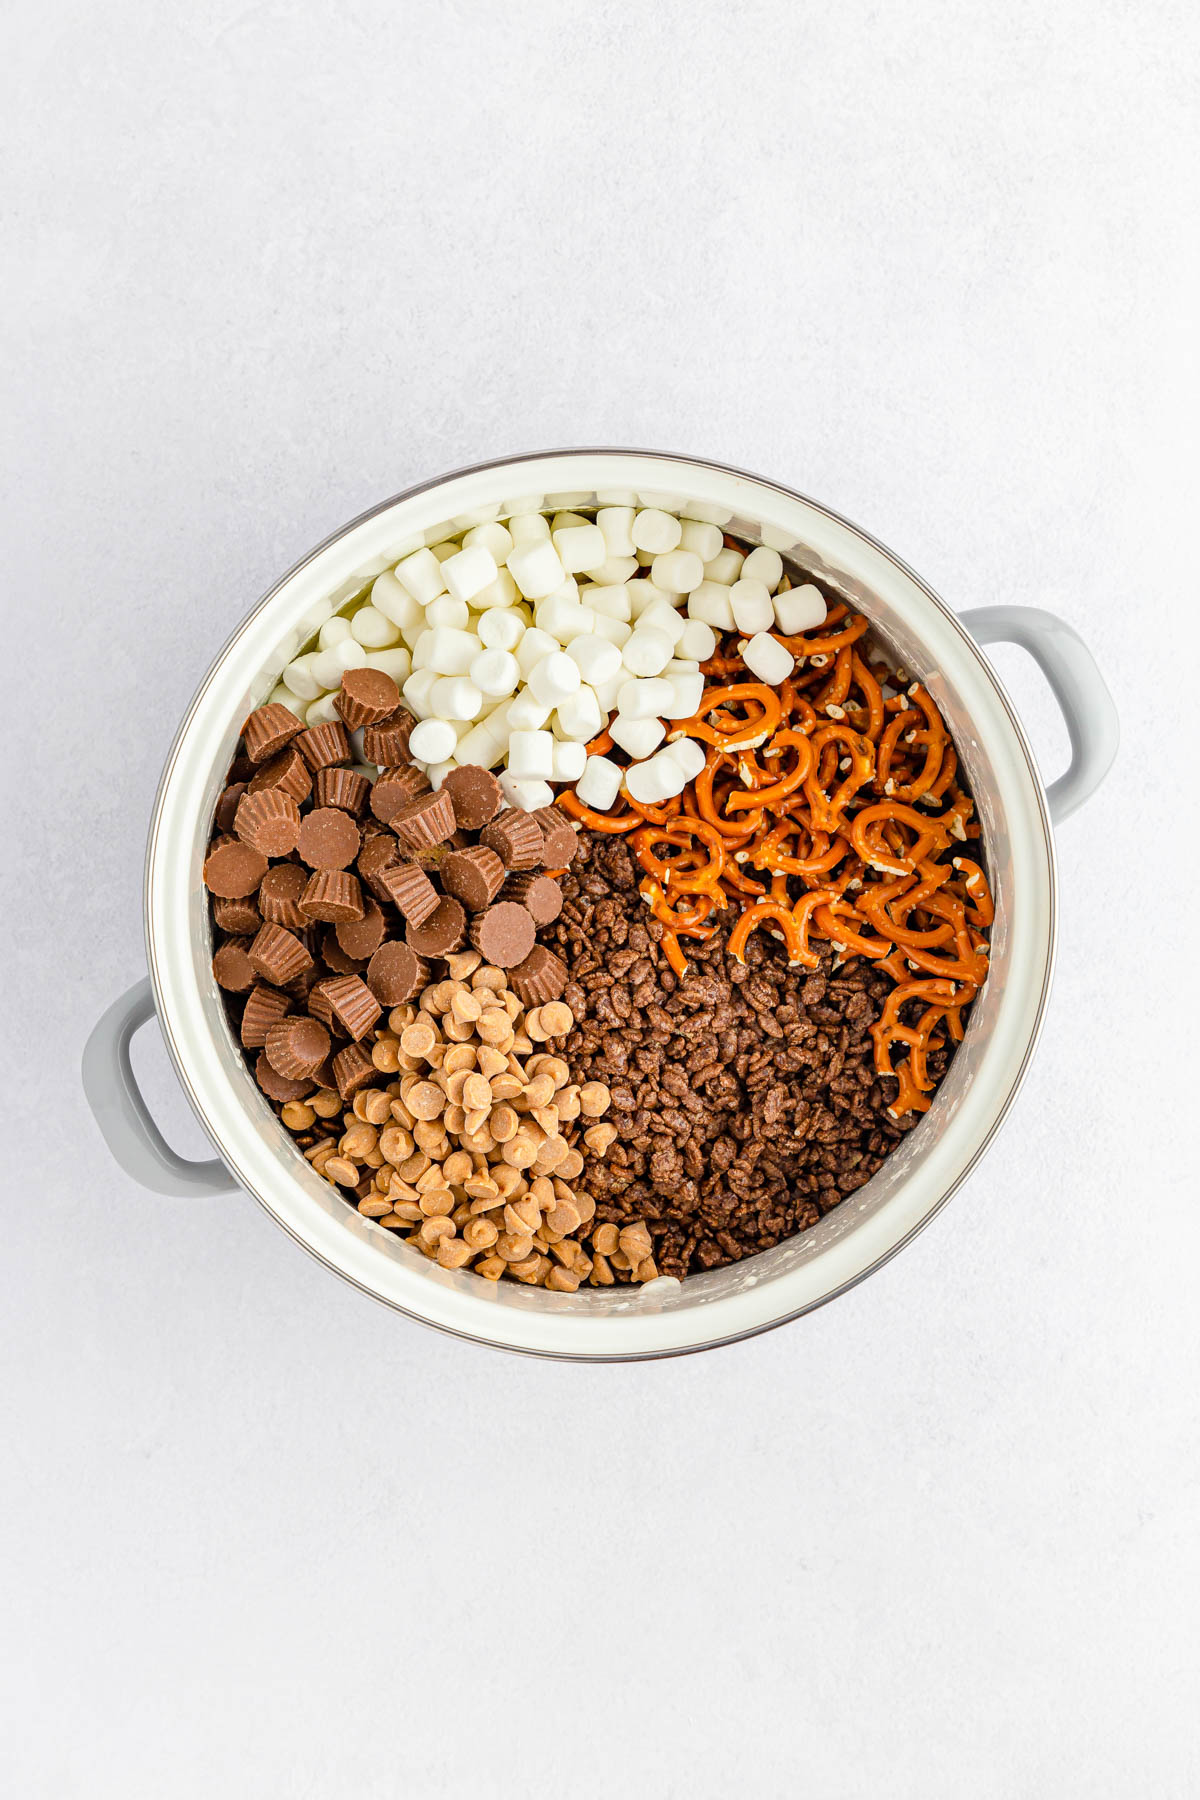 Ingredients for cocoa krispie treats in pan